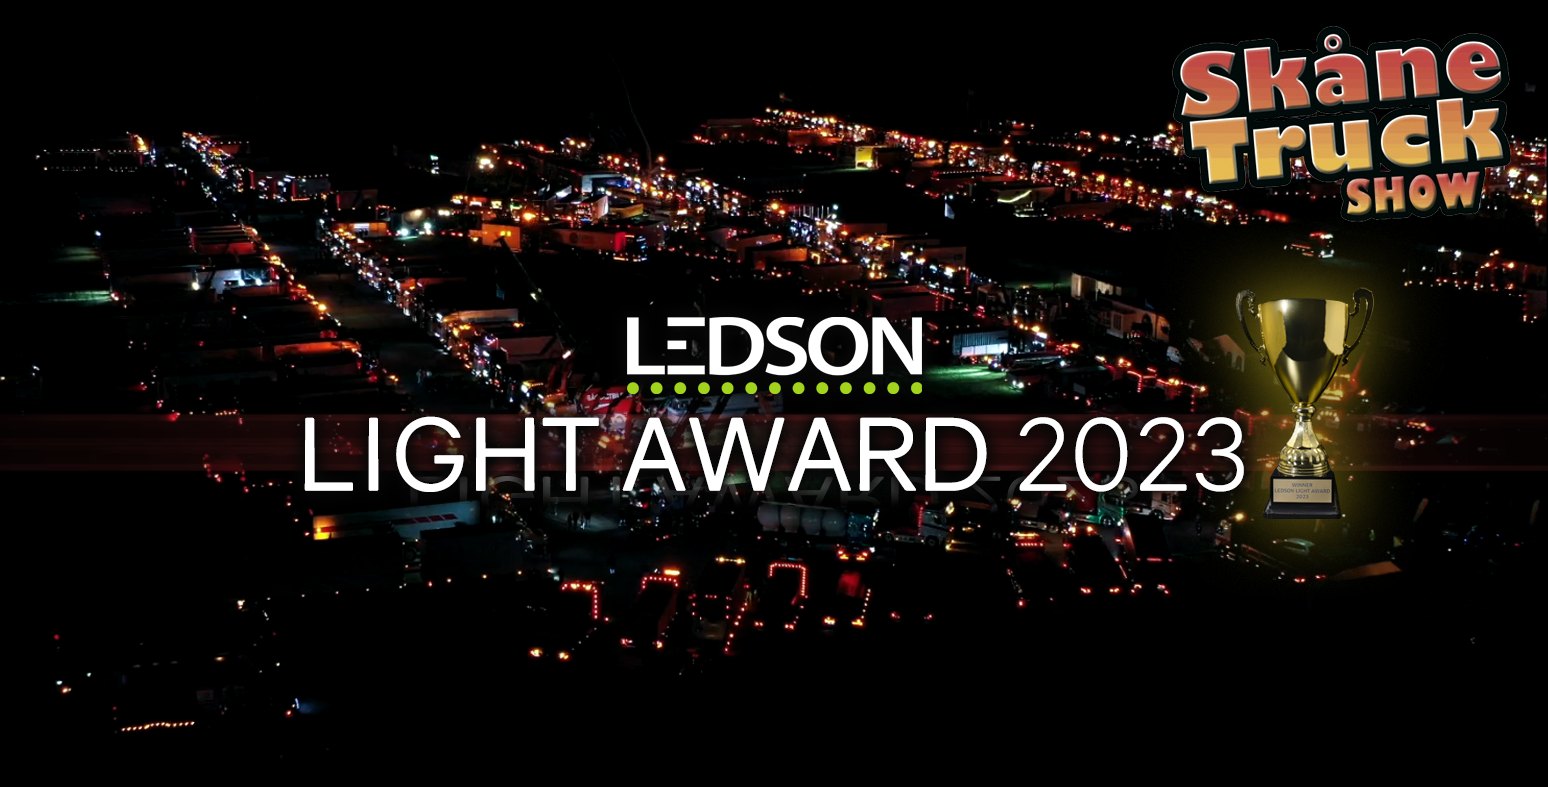 Ledson Light Award 2023 (Skåne Truck Show)